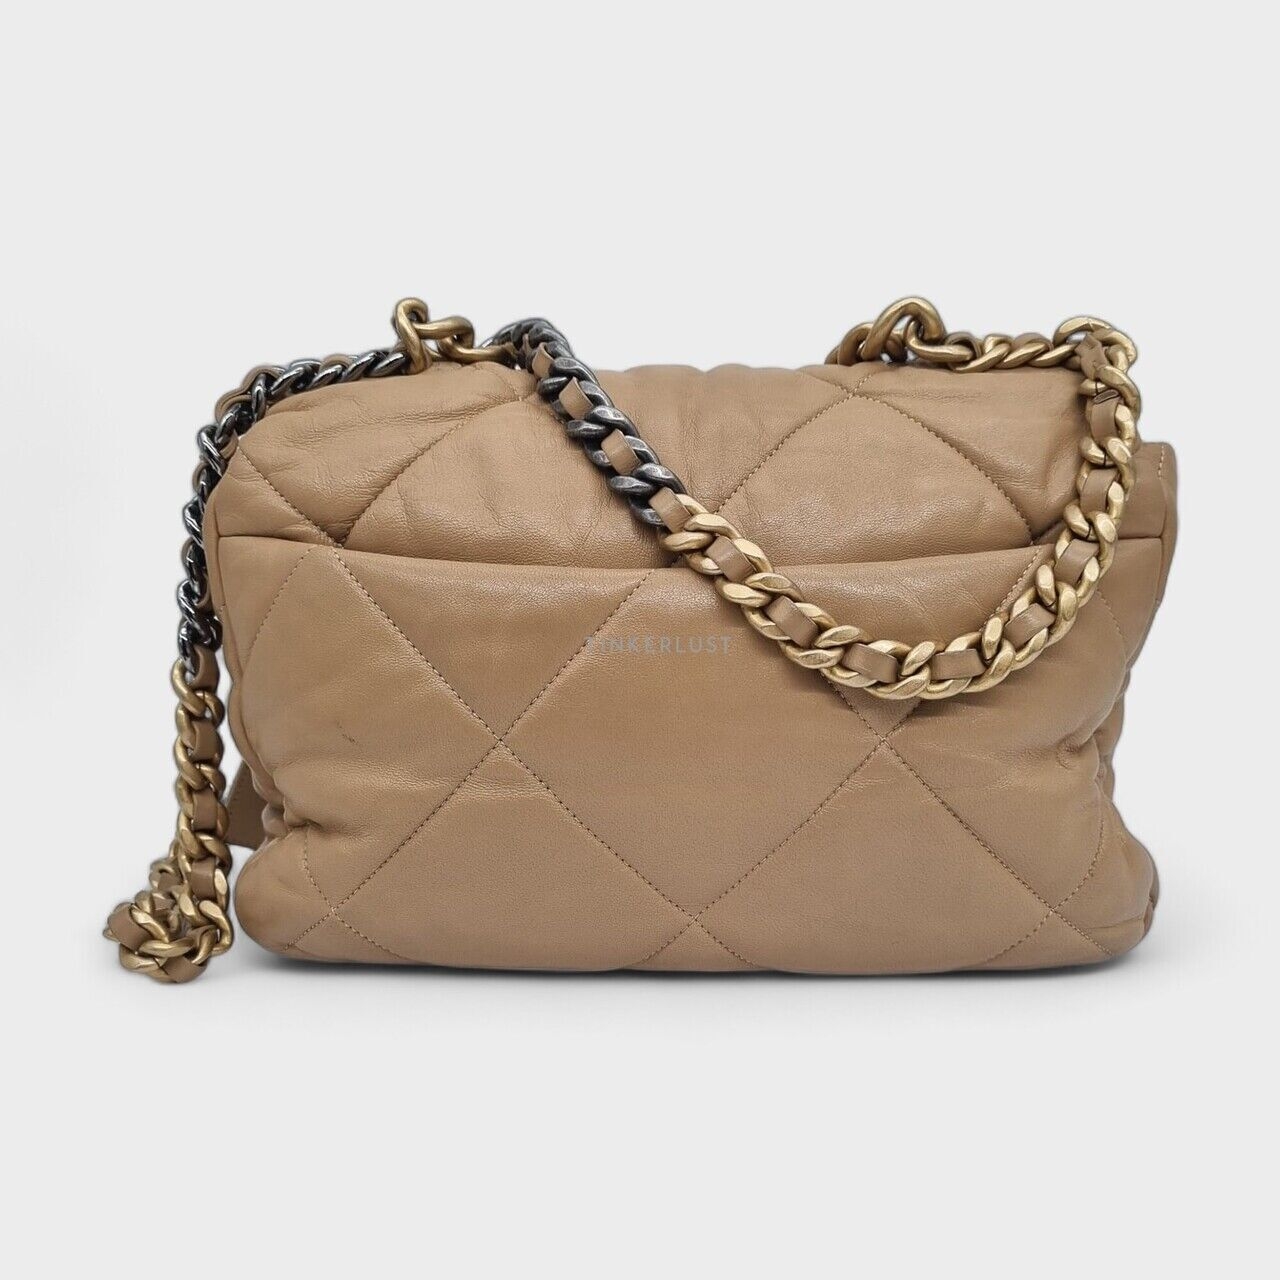 Chanel C19 Medium Beige GHW #29 Sling Bag